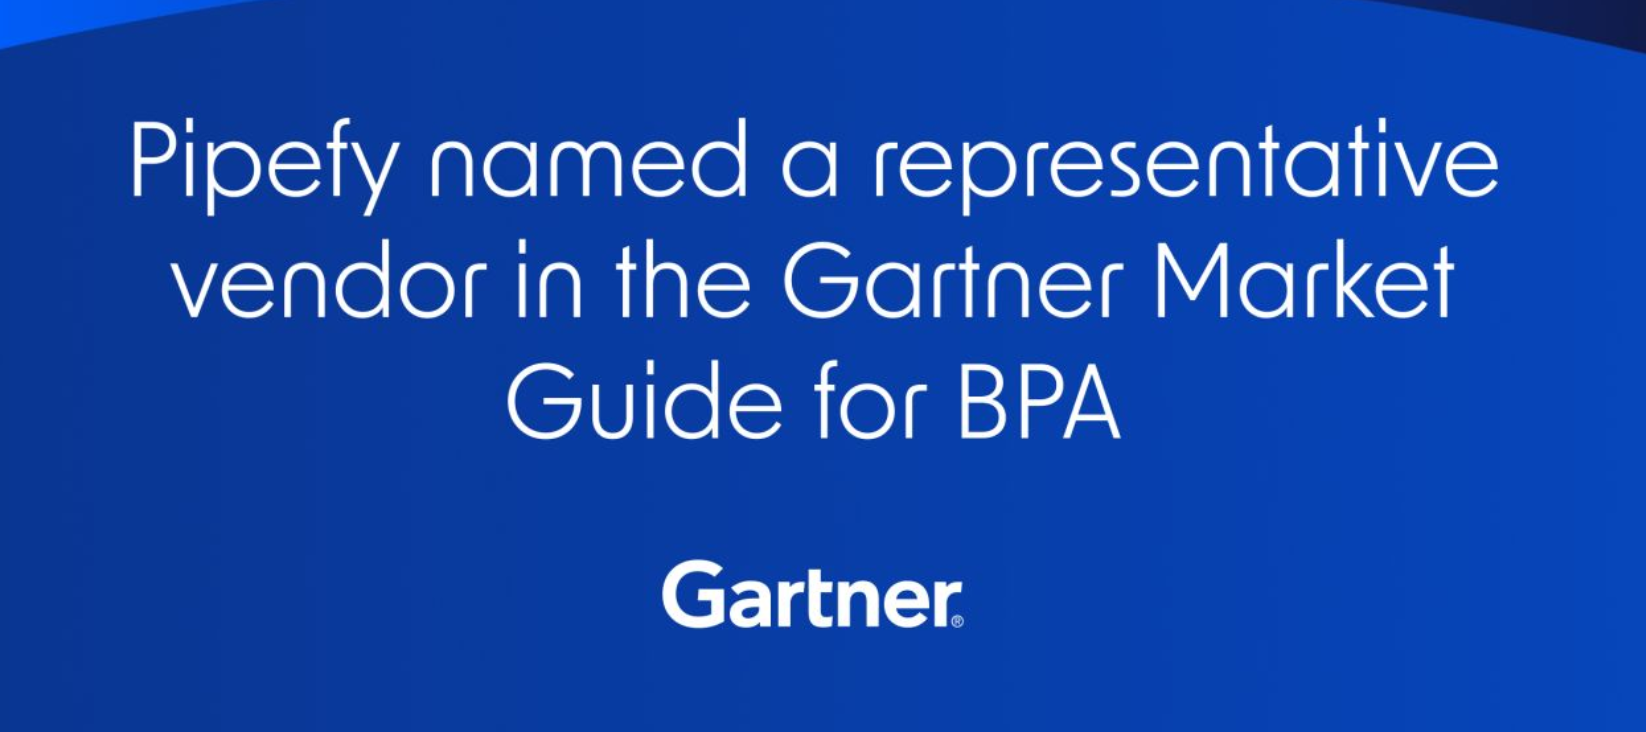 Pipefy as a representative vendor in the Gartner Market Guide for BPA